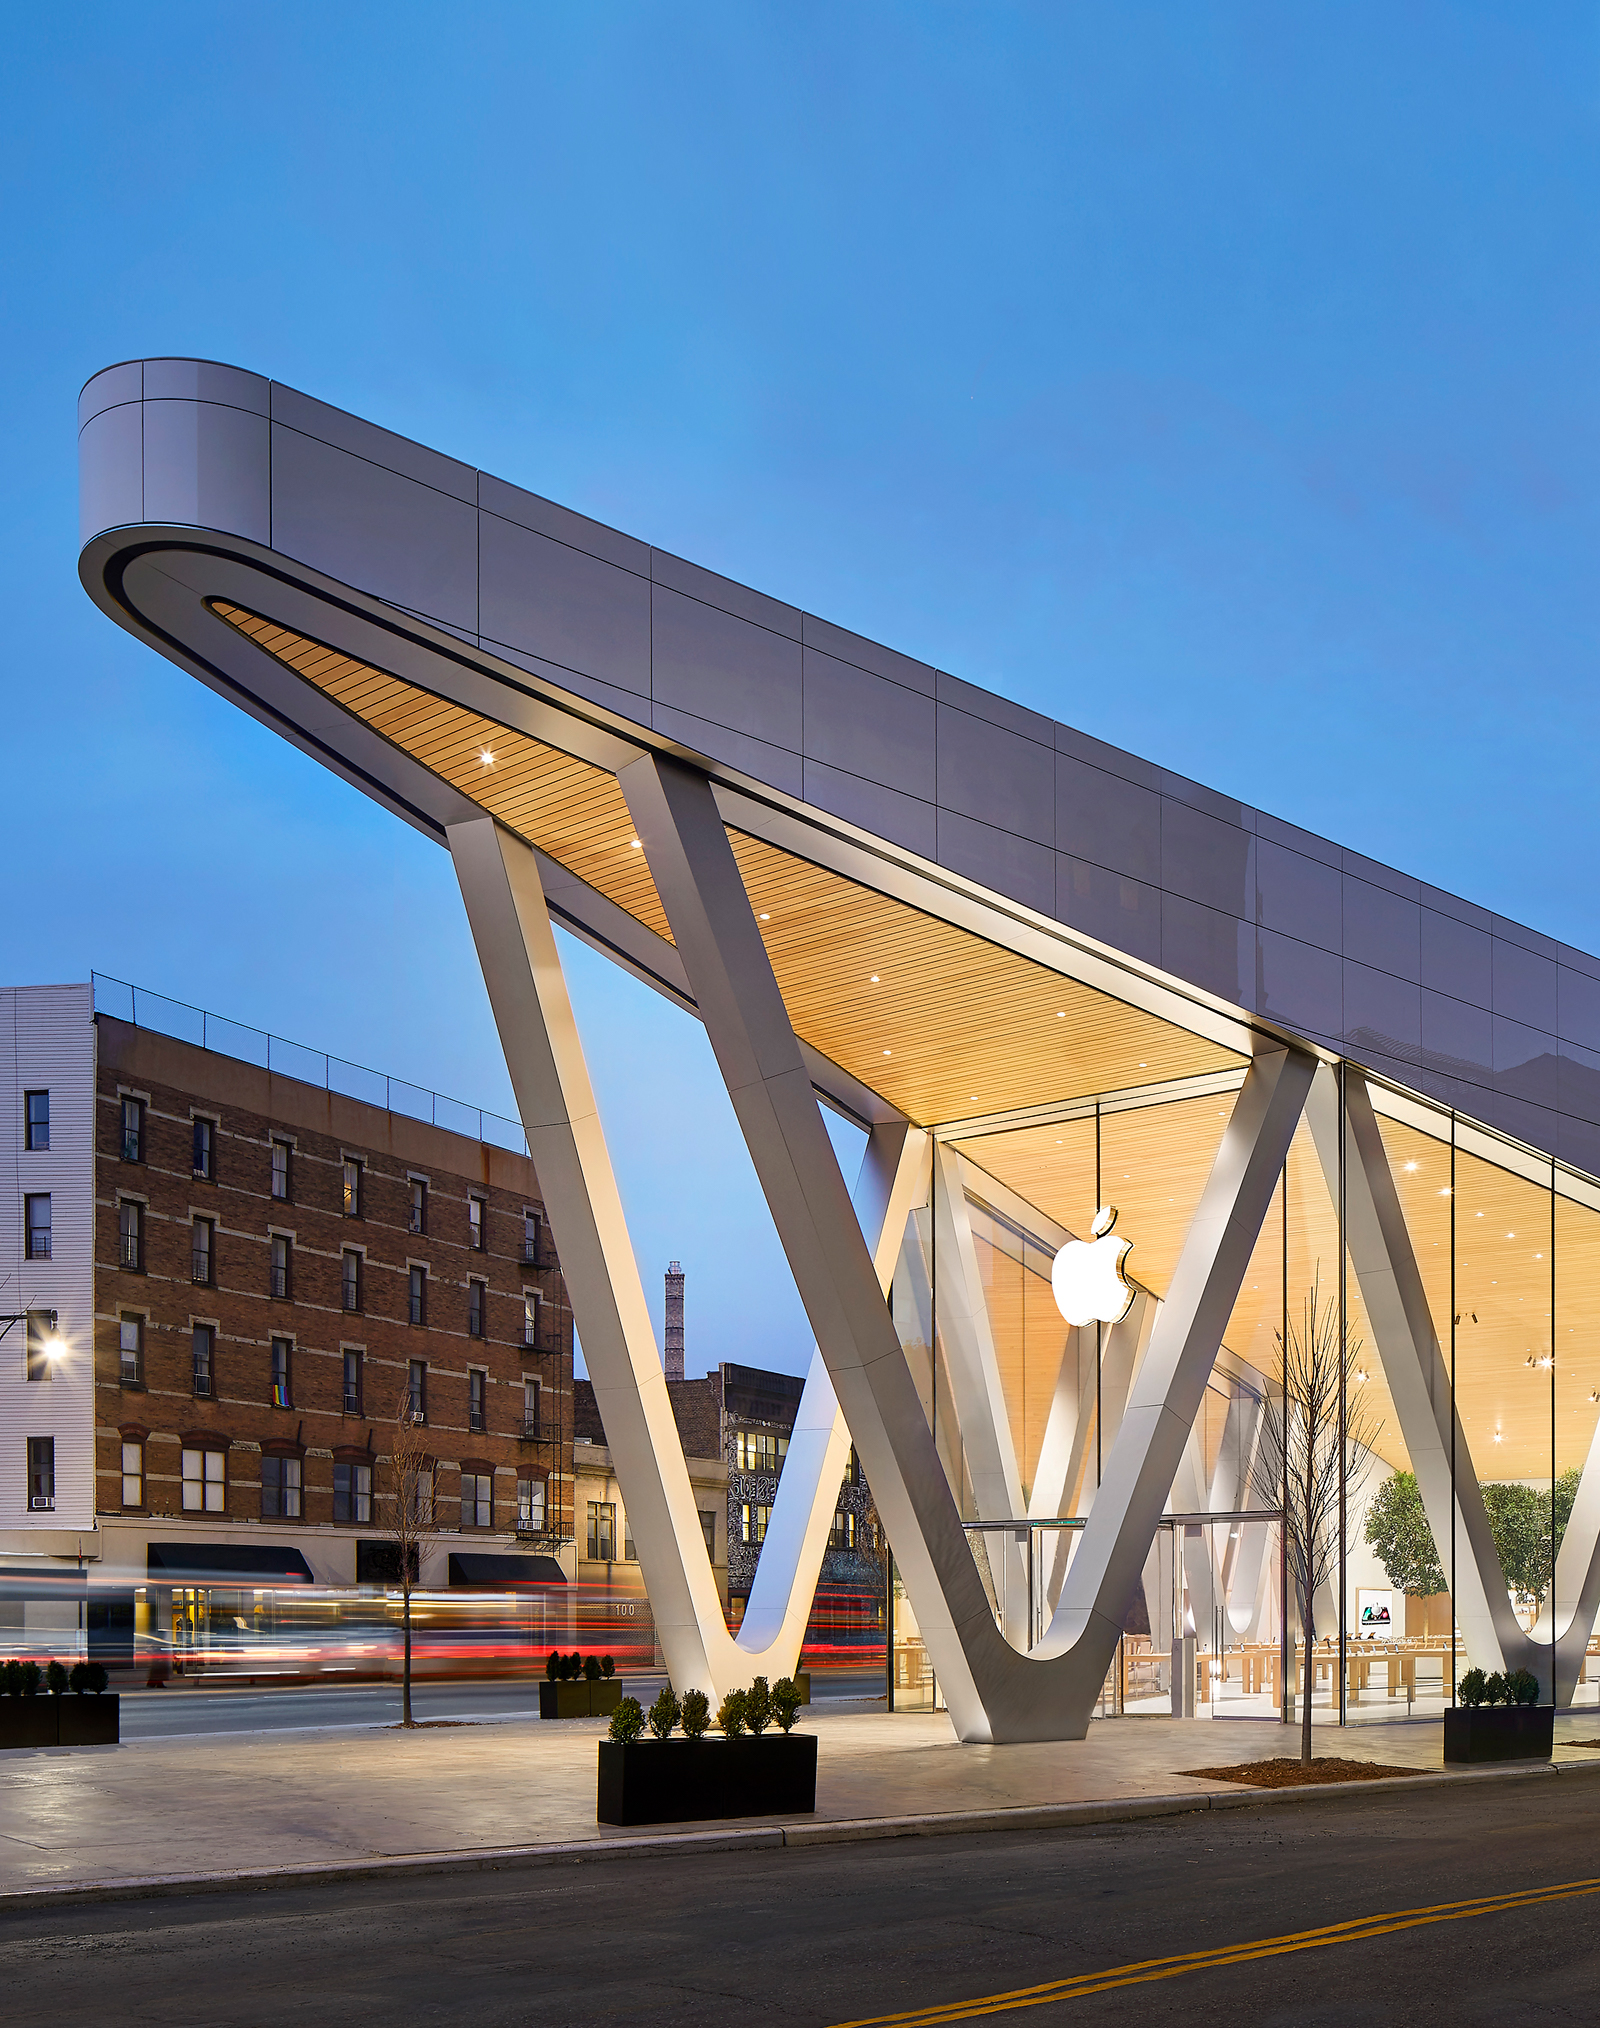 Apple Downtown Brooklyn 是 Apple Store 零售店在建筑与设计上不断锐意创新的典范